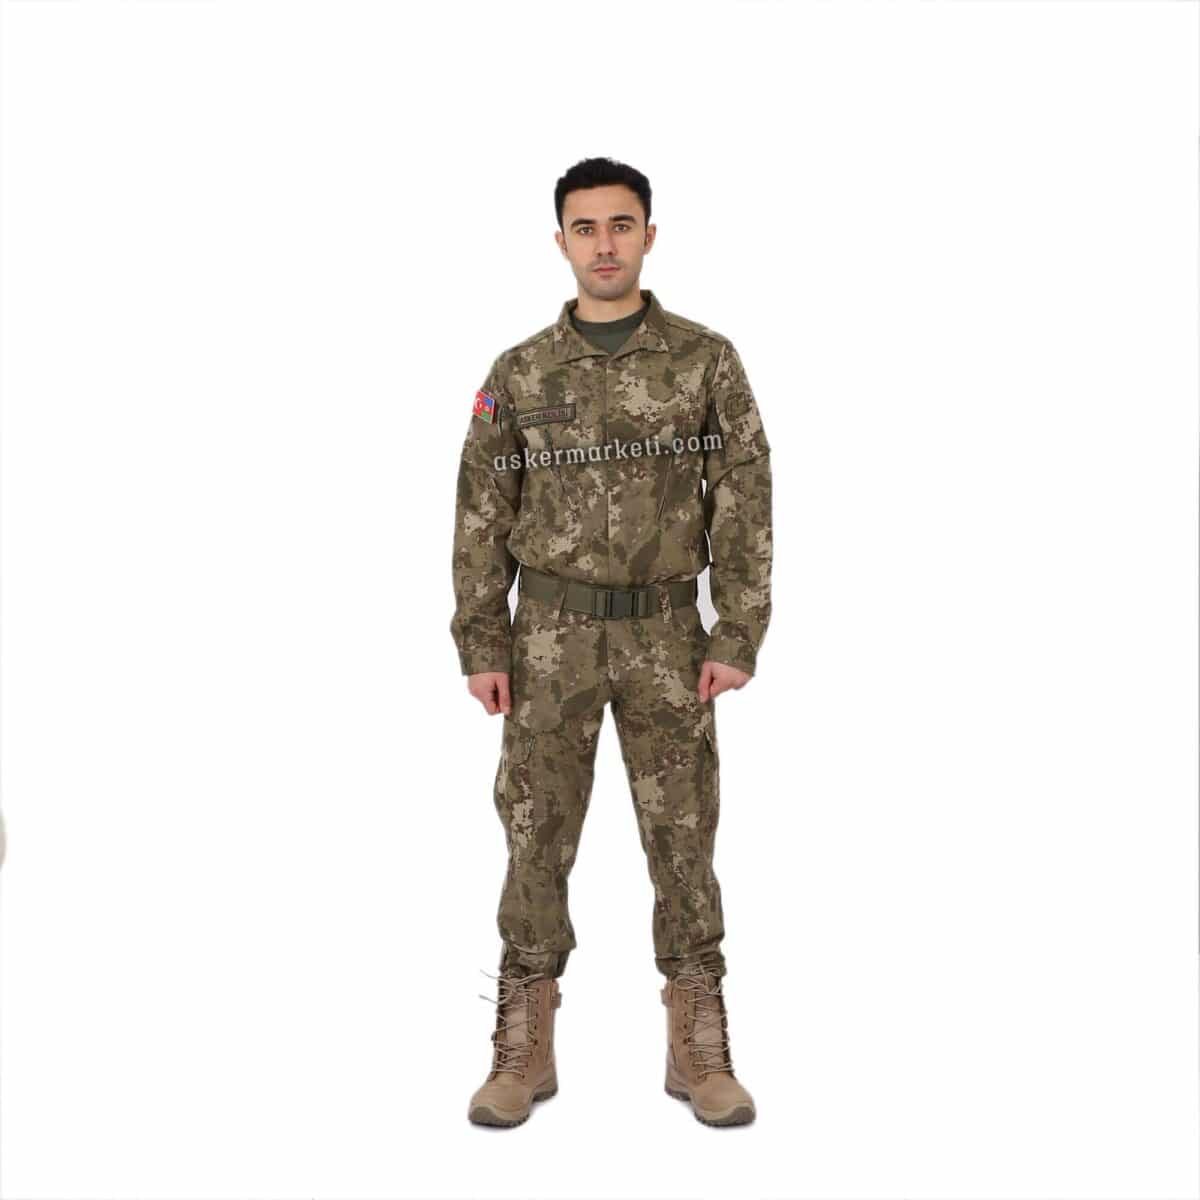 yeni tip askeri kamuflaj gomlek pantolon palaska uniforma ink